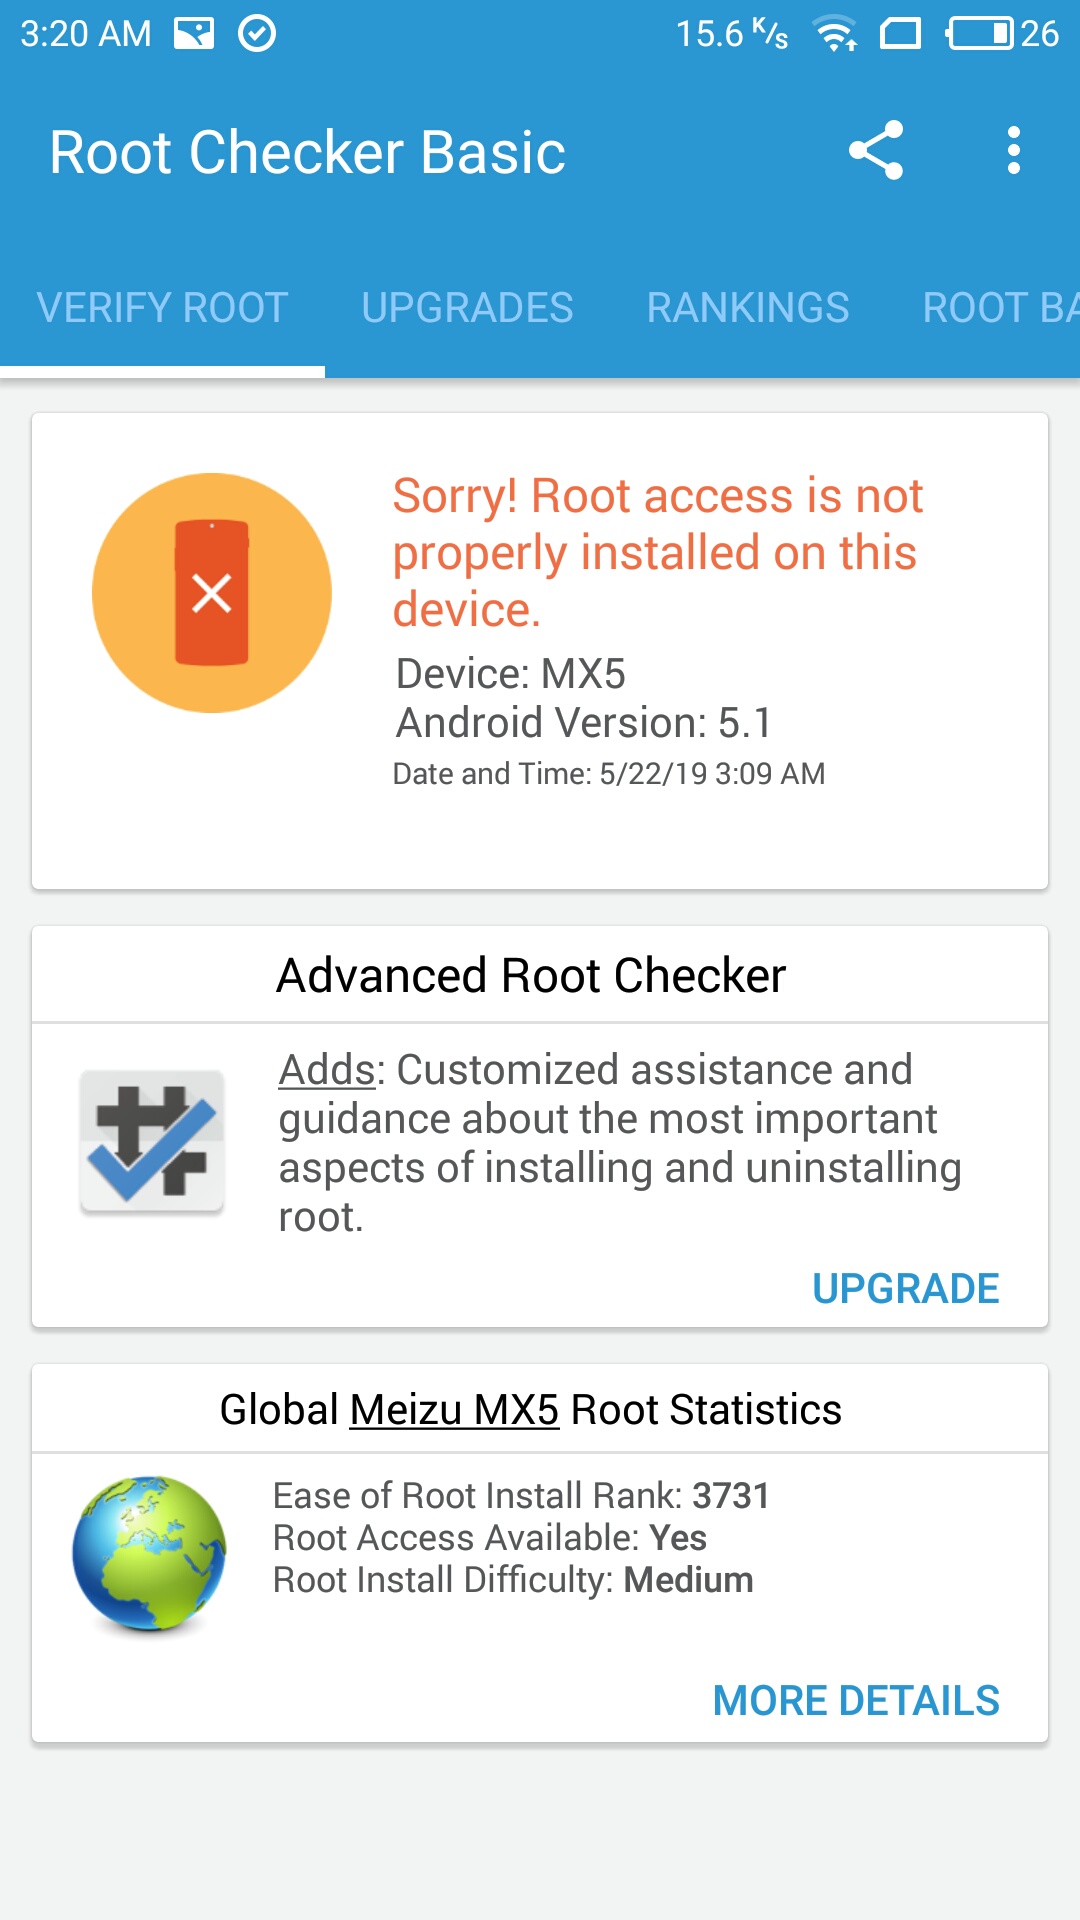 vuze requiring root access to update